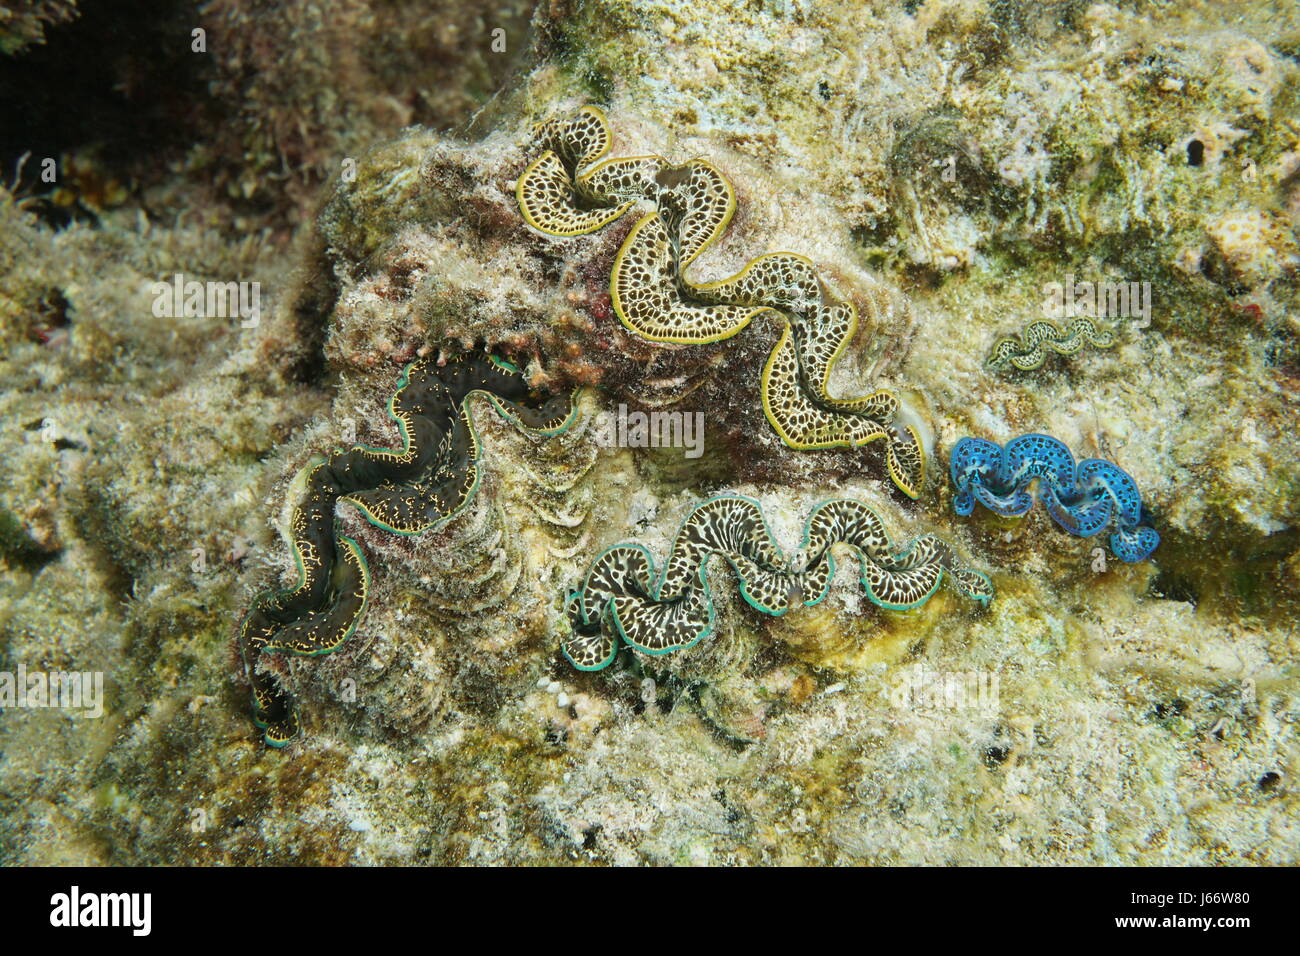 Colorful marine bivalve molluscs underwater, maxima clam, Tridacna maxima, Pacific ocean, Bora Bora, French polynesia Stock Photo